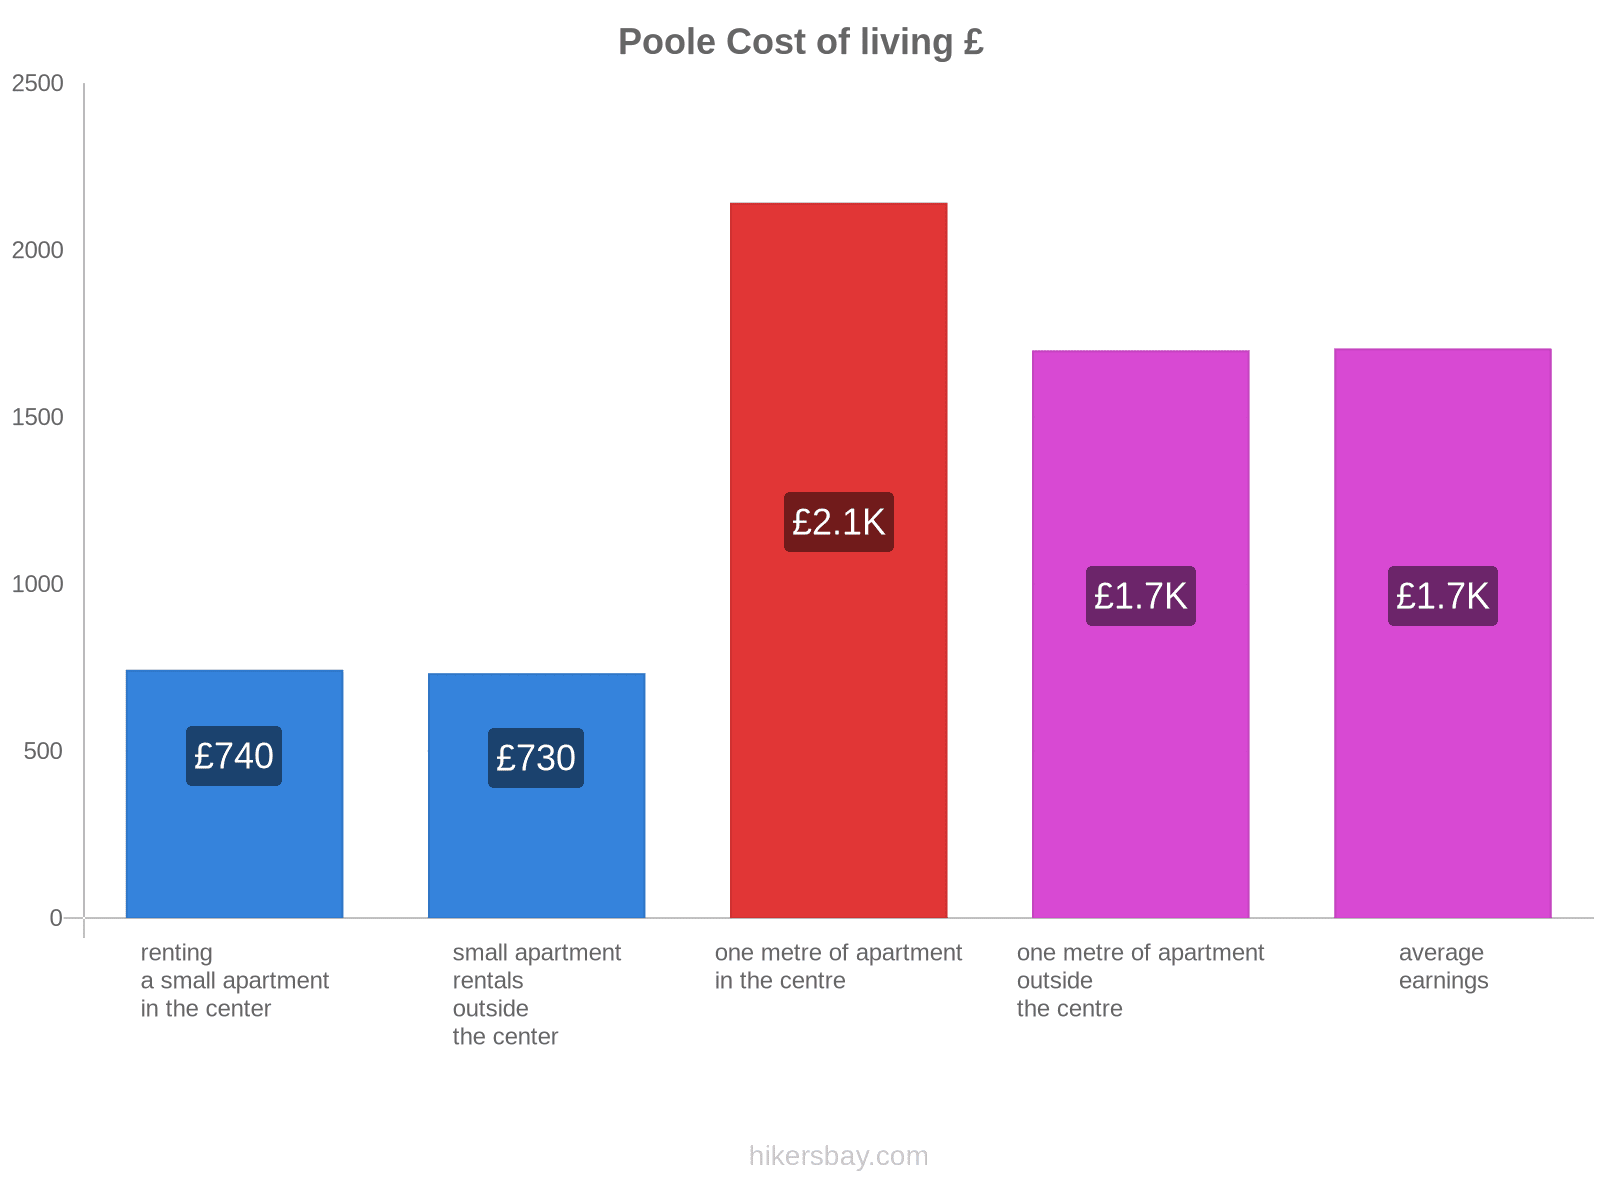 Poole cost of living hikersbay.com